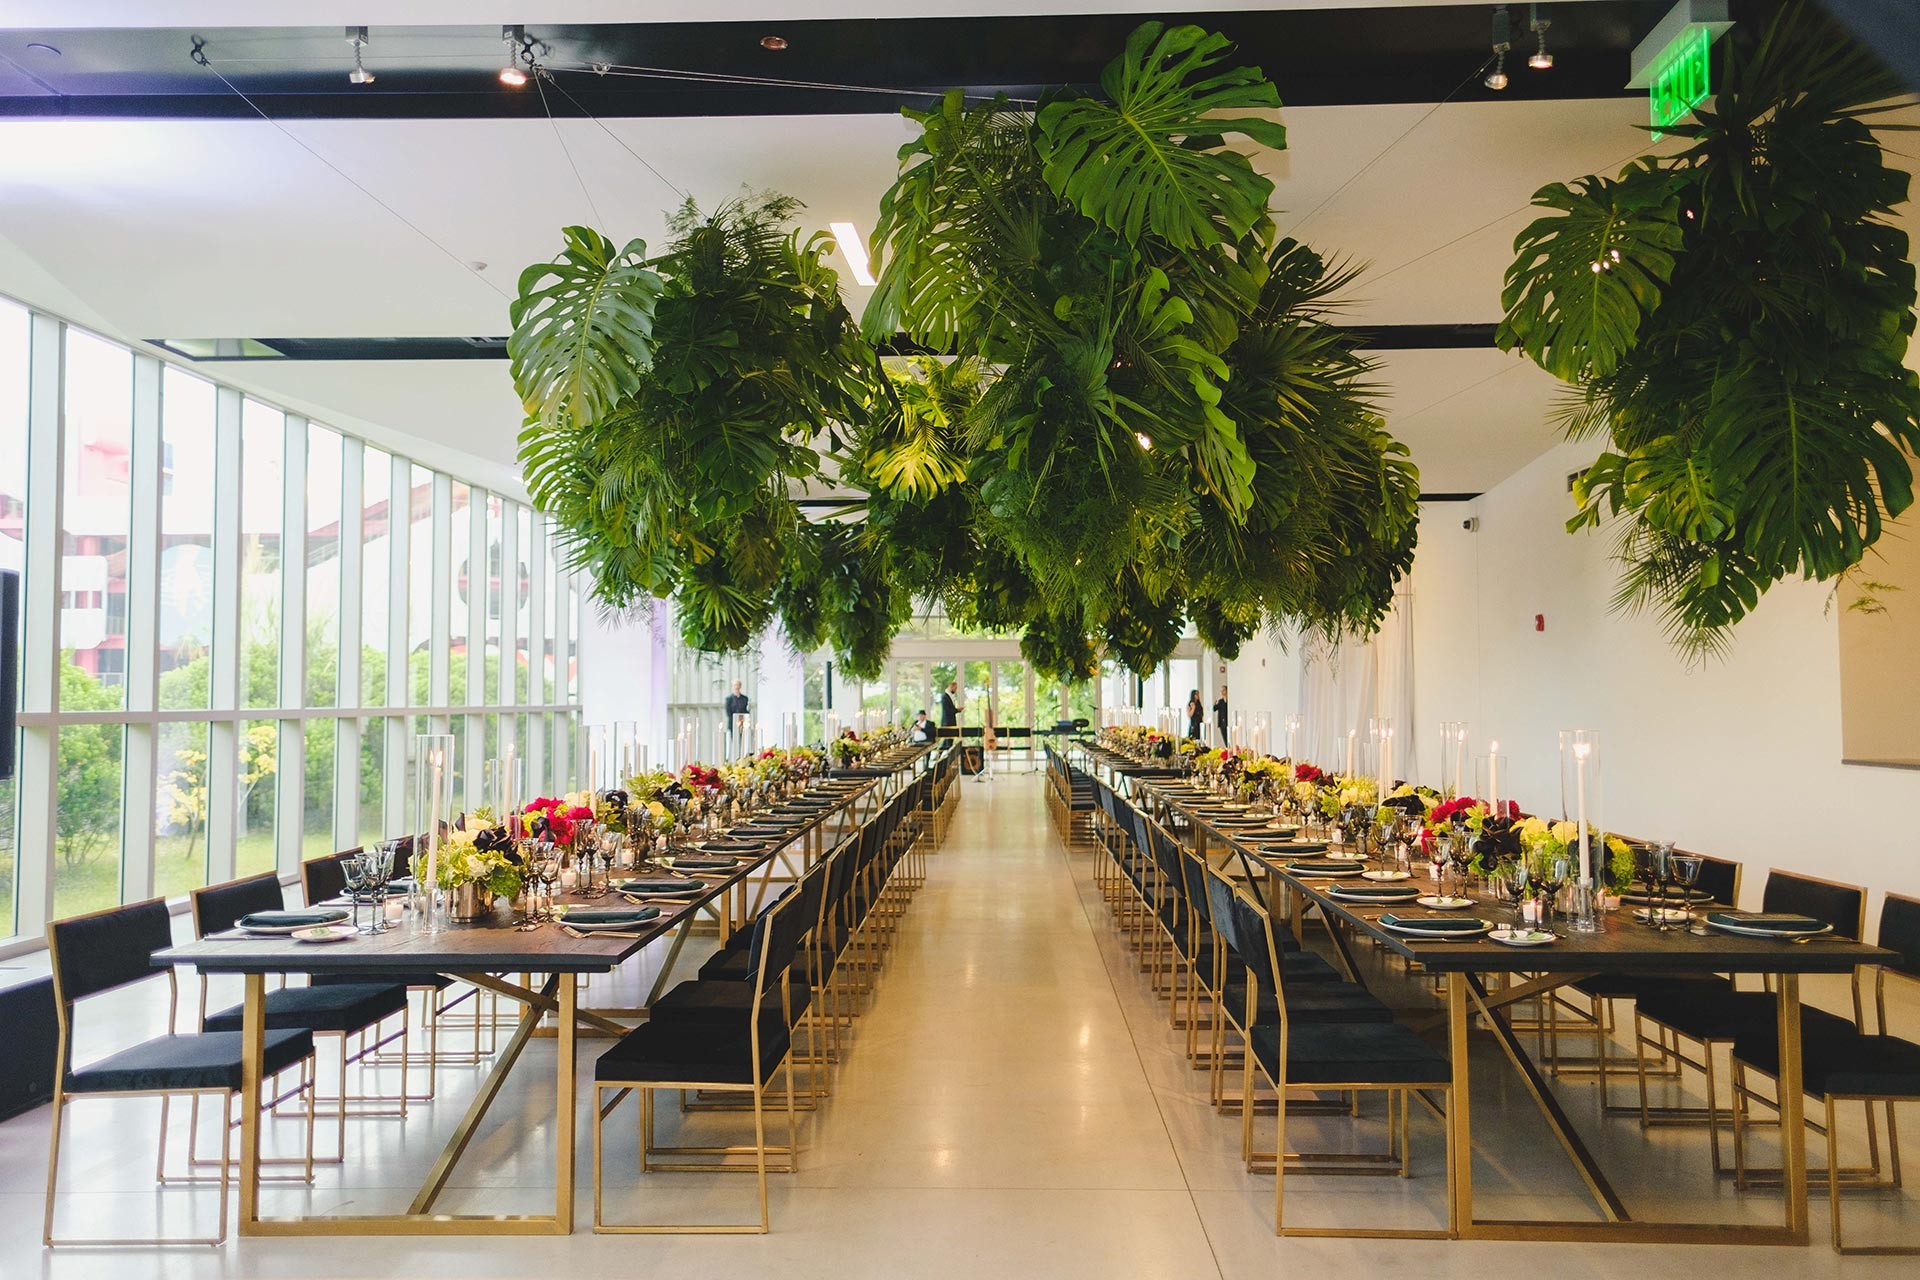 Paradise Plaza, Miami Design District's latest luxury mecca, opens